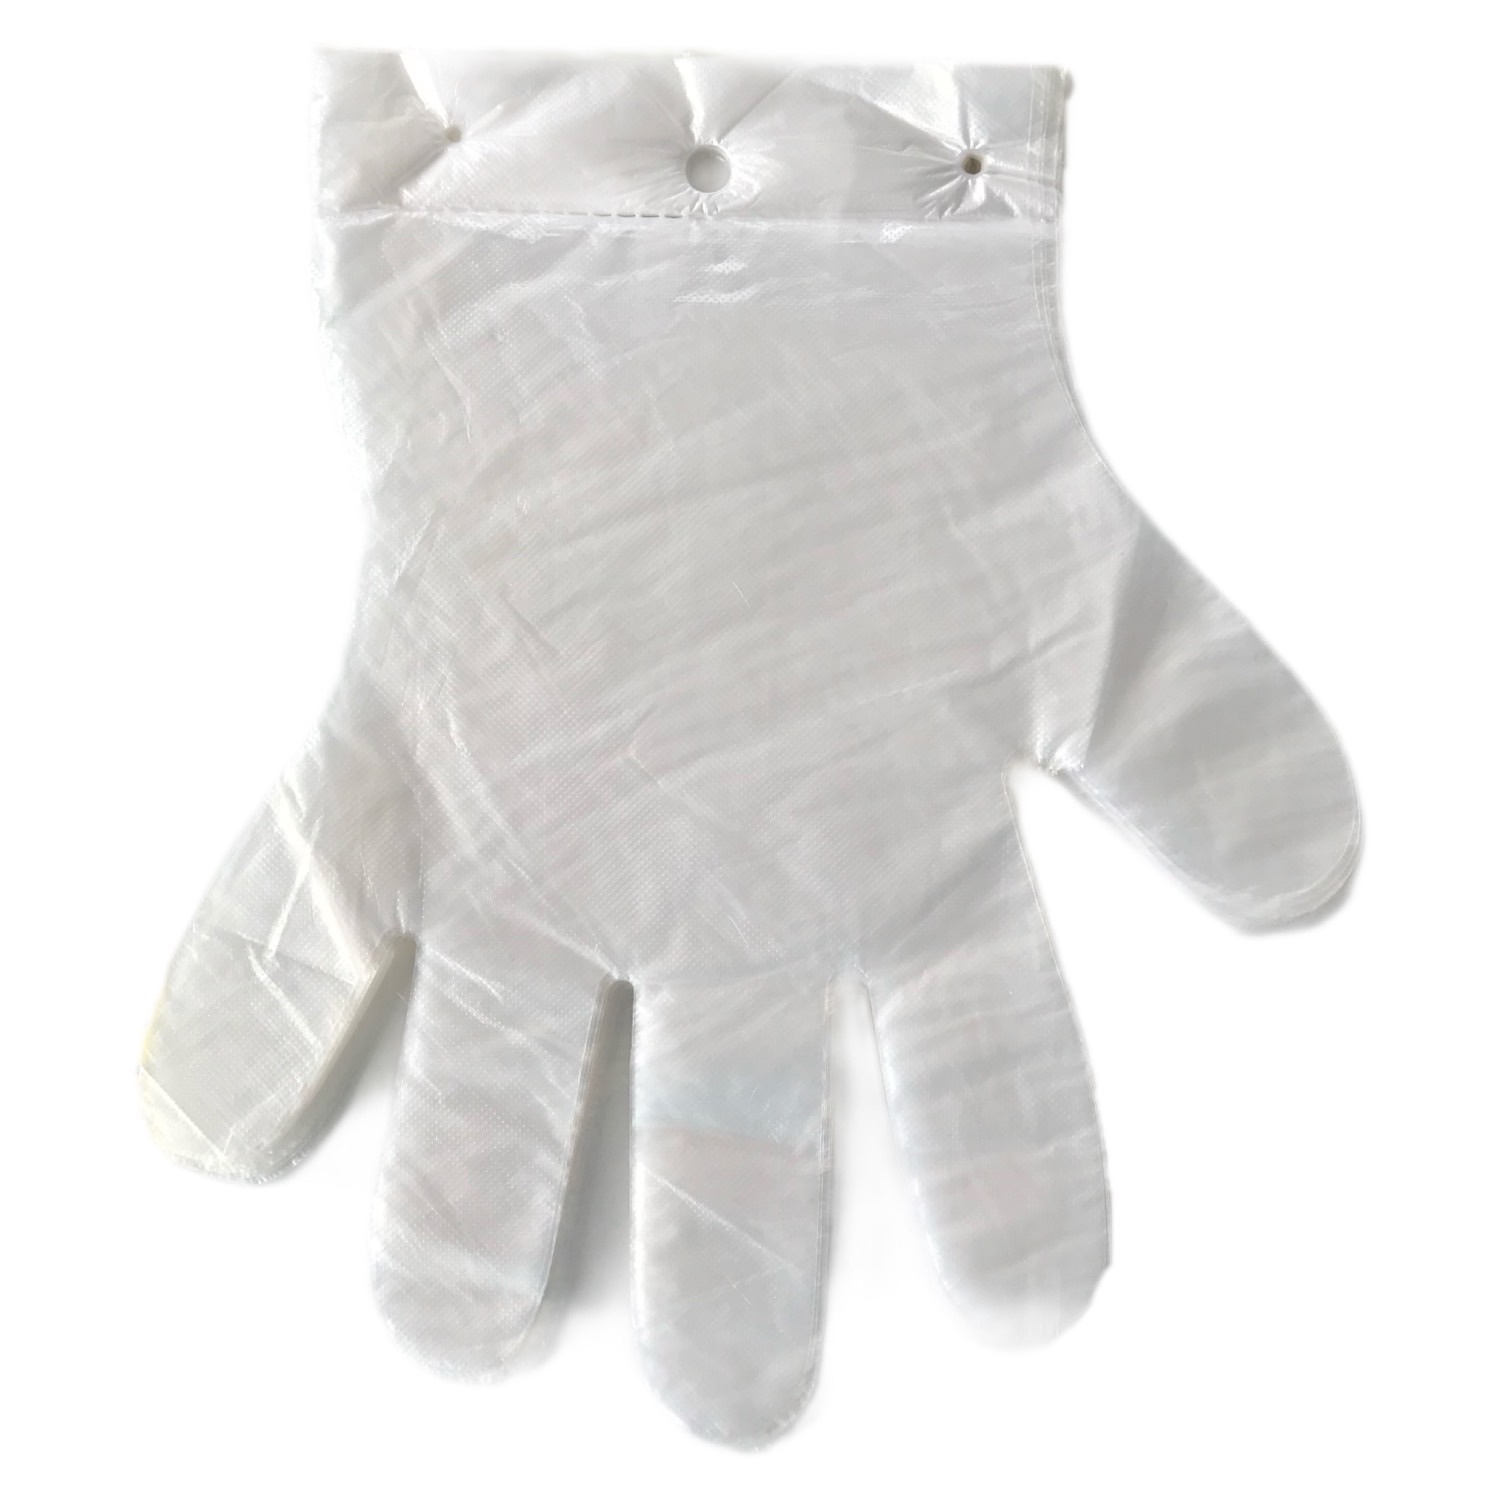 HDPE gloves